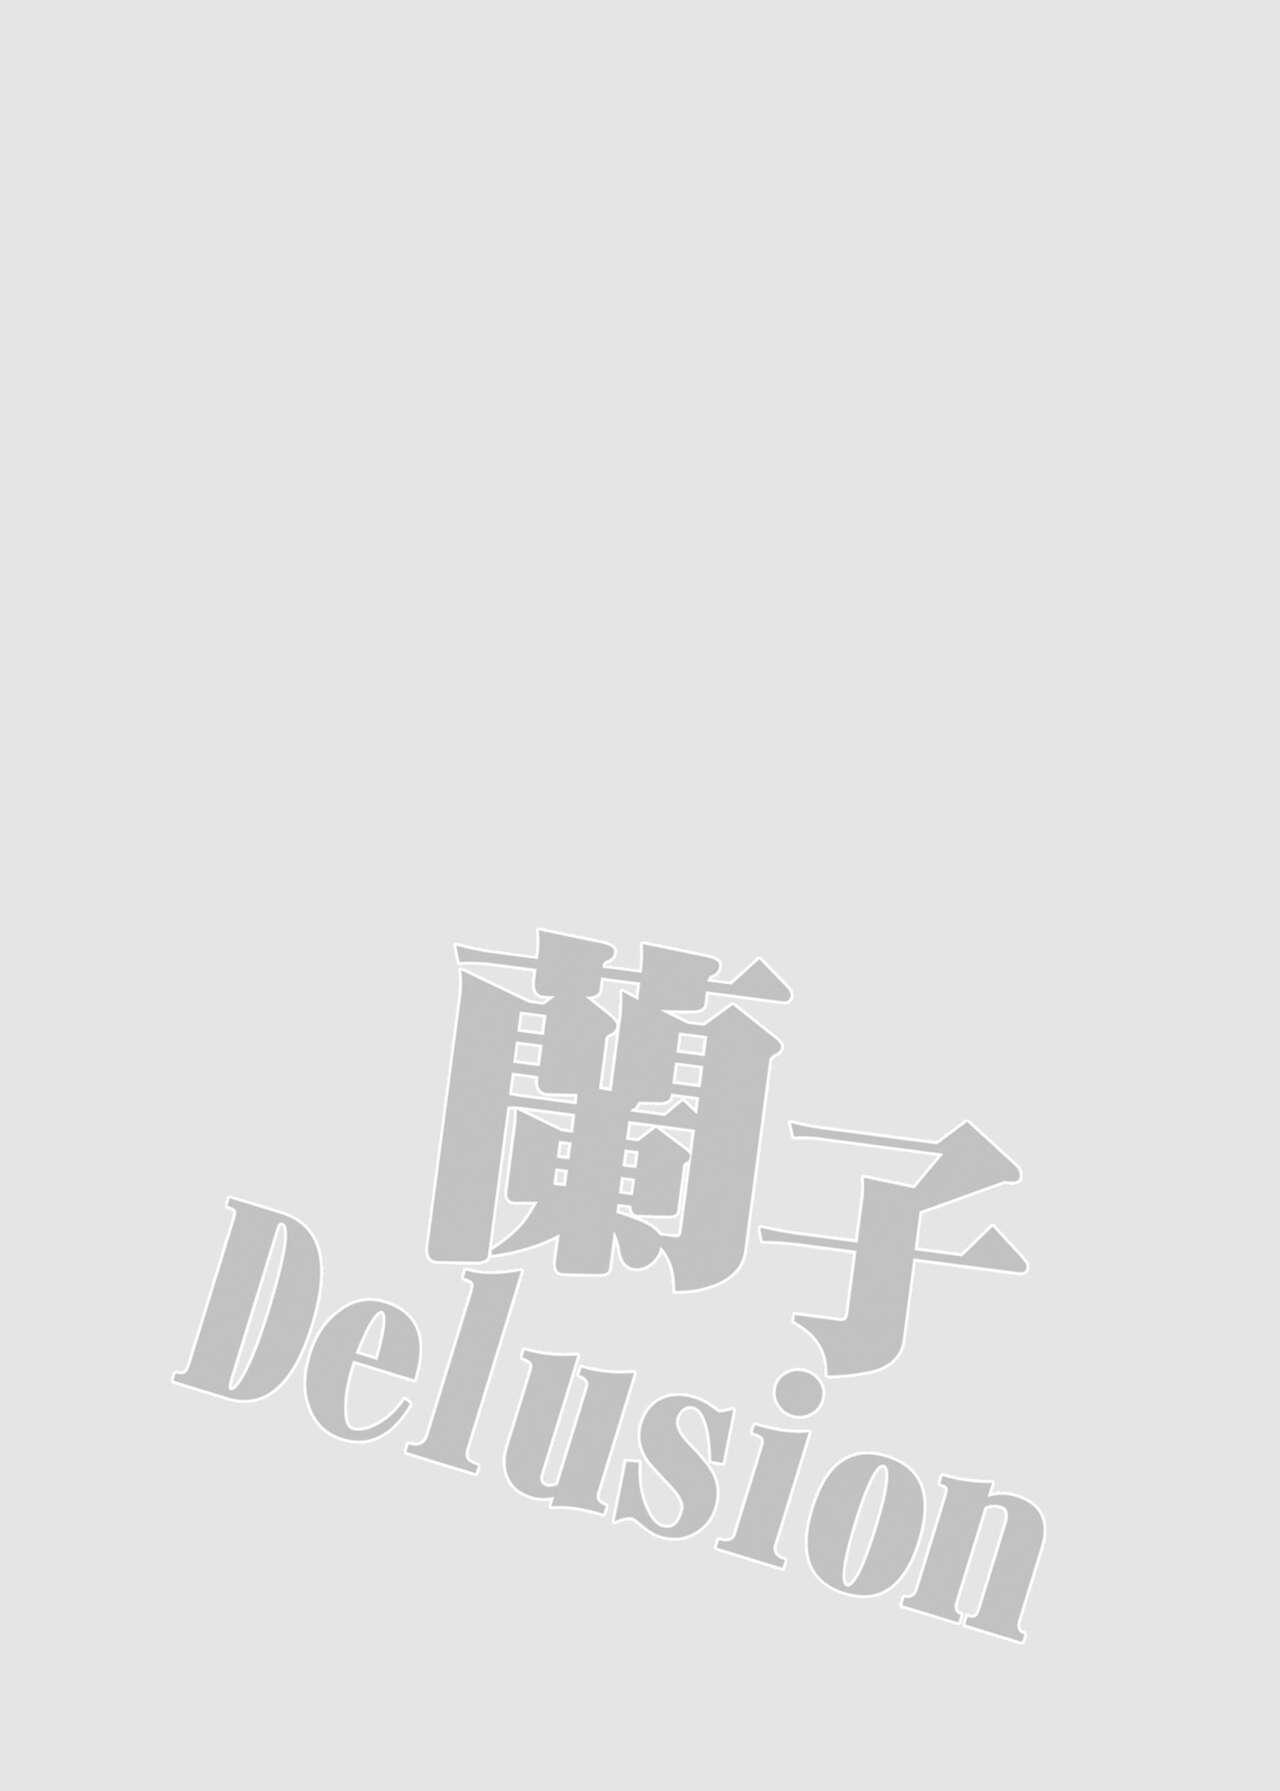 Cash 蘭子Deiusion - The idolmaster Blackwoman - Picture 3